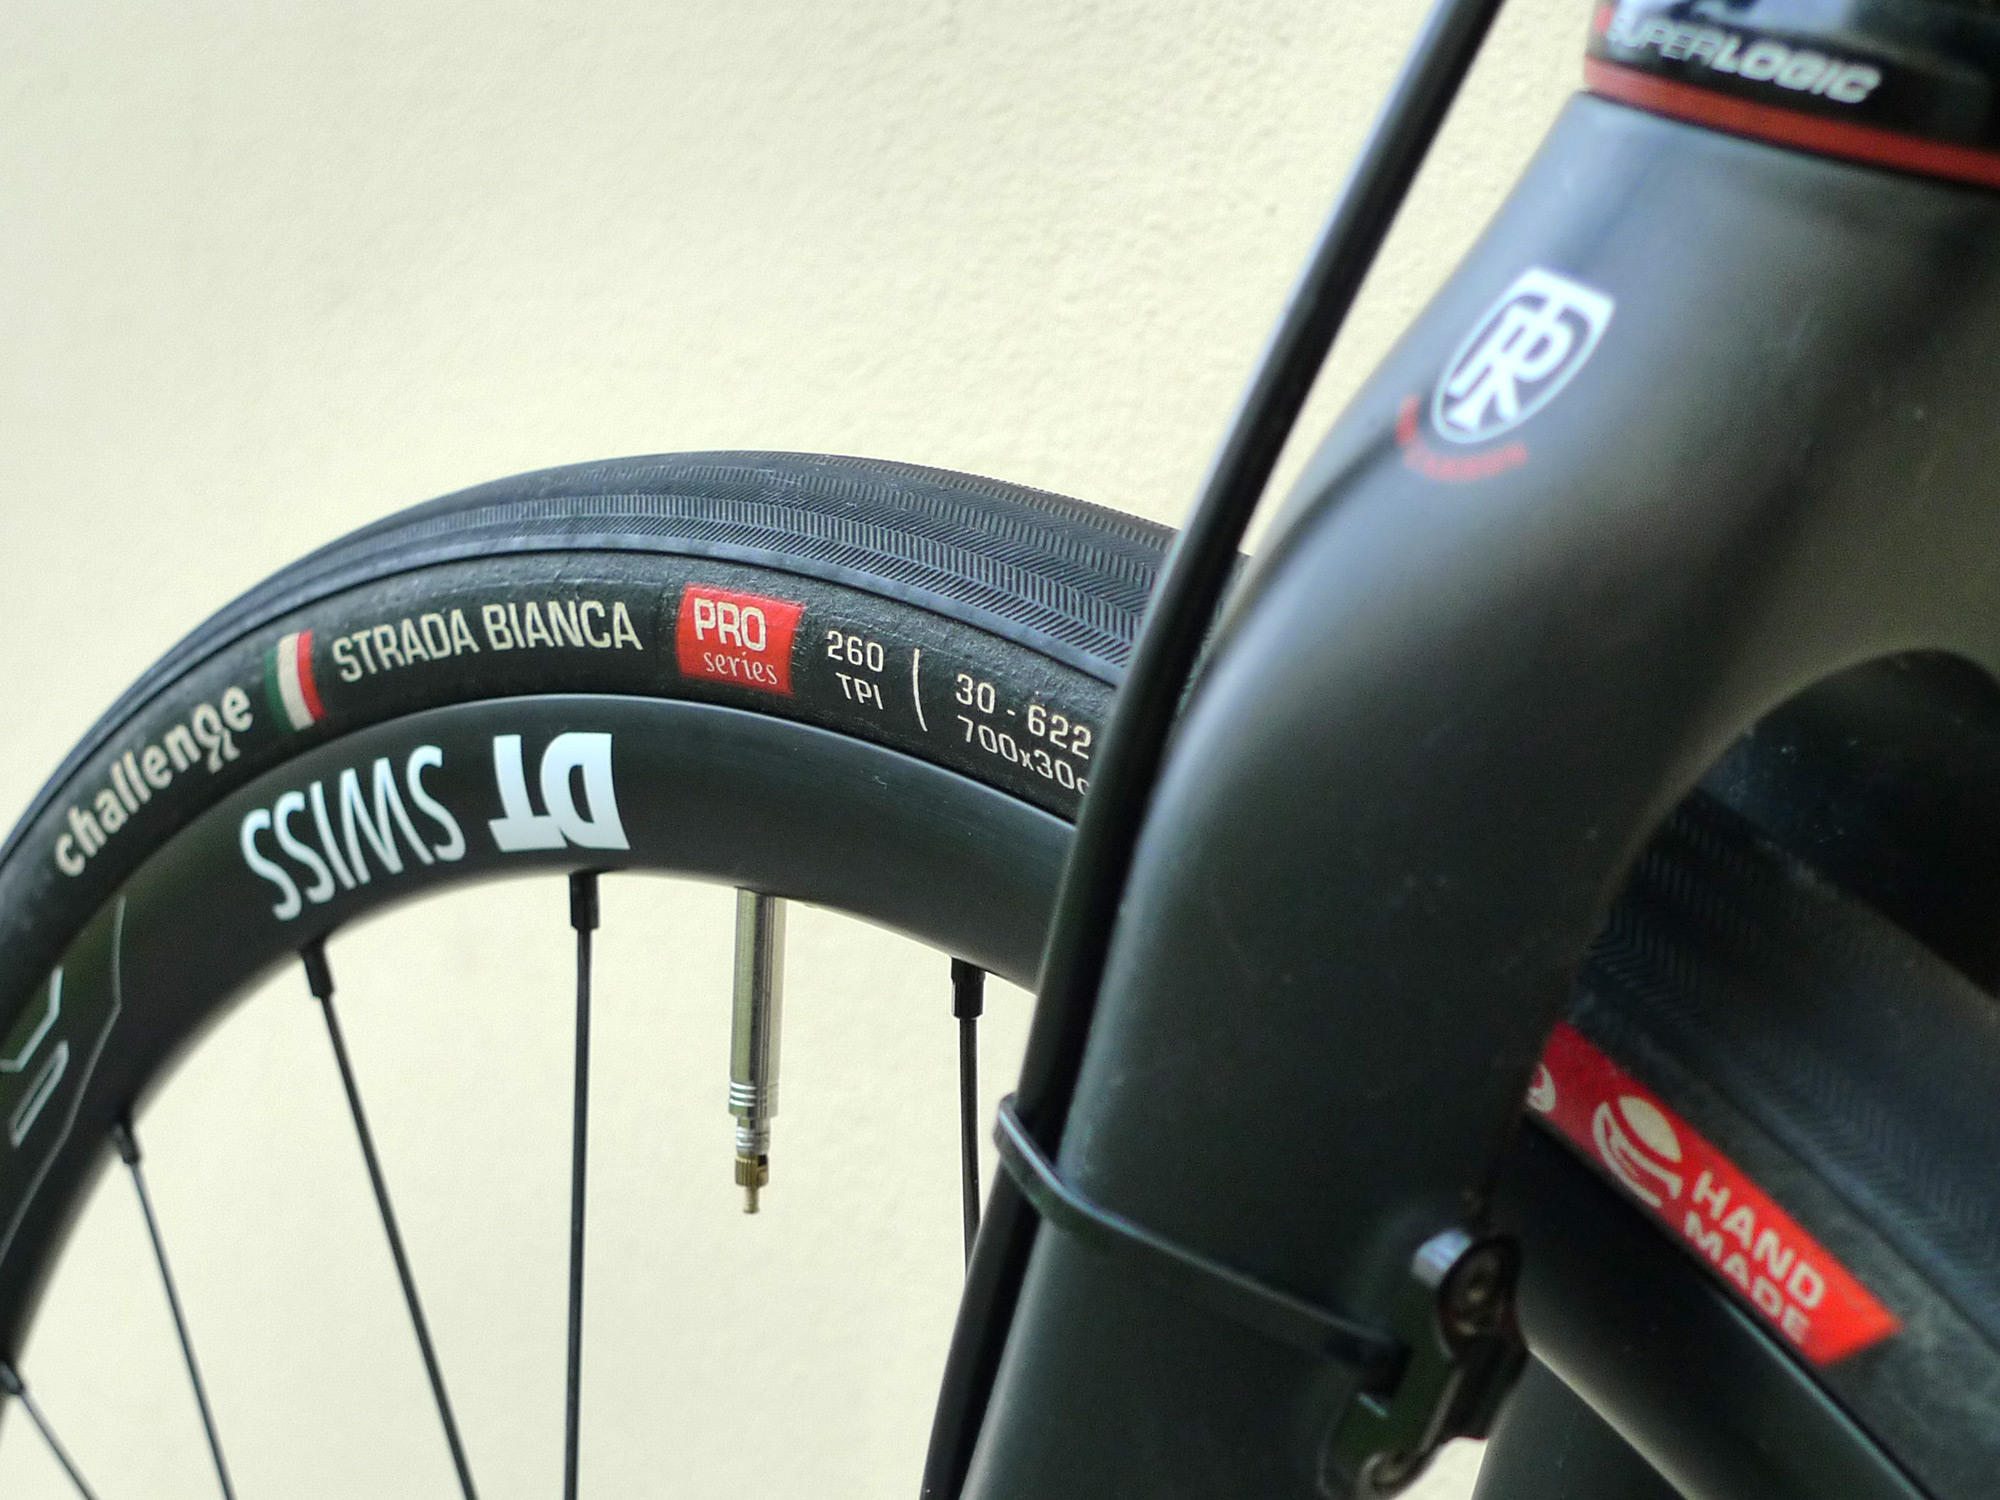 Review: Challenge Strada Bianca & Paris-Roubaix have gravel clinched - Bikerumor